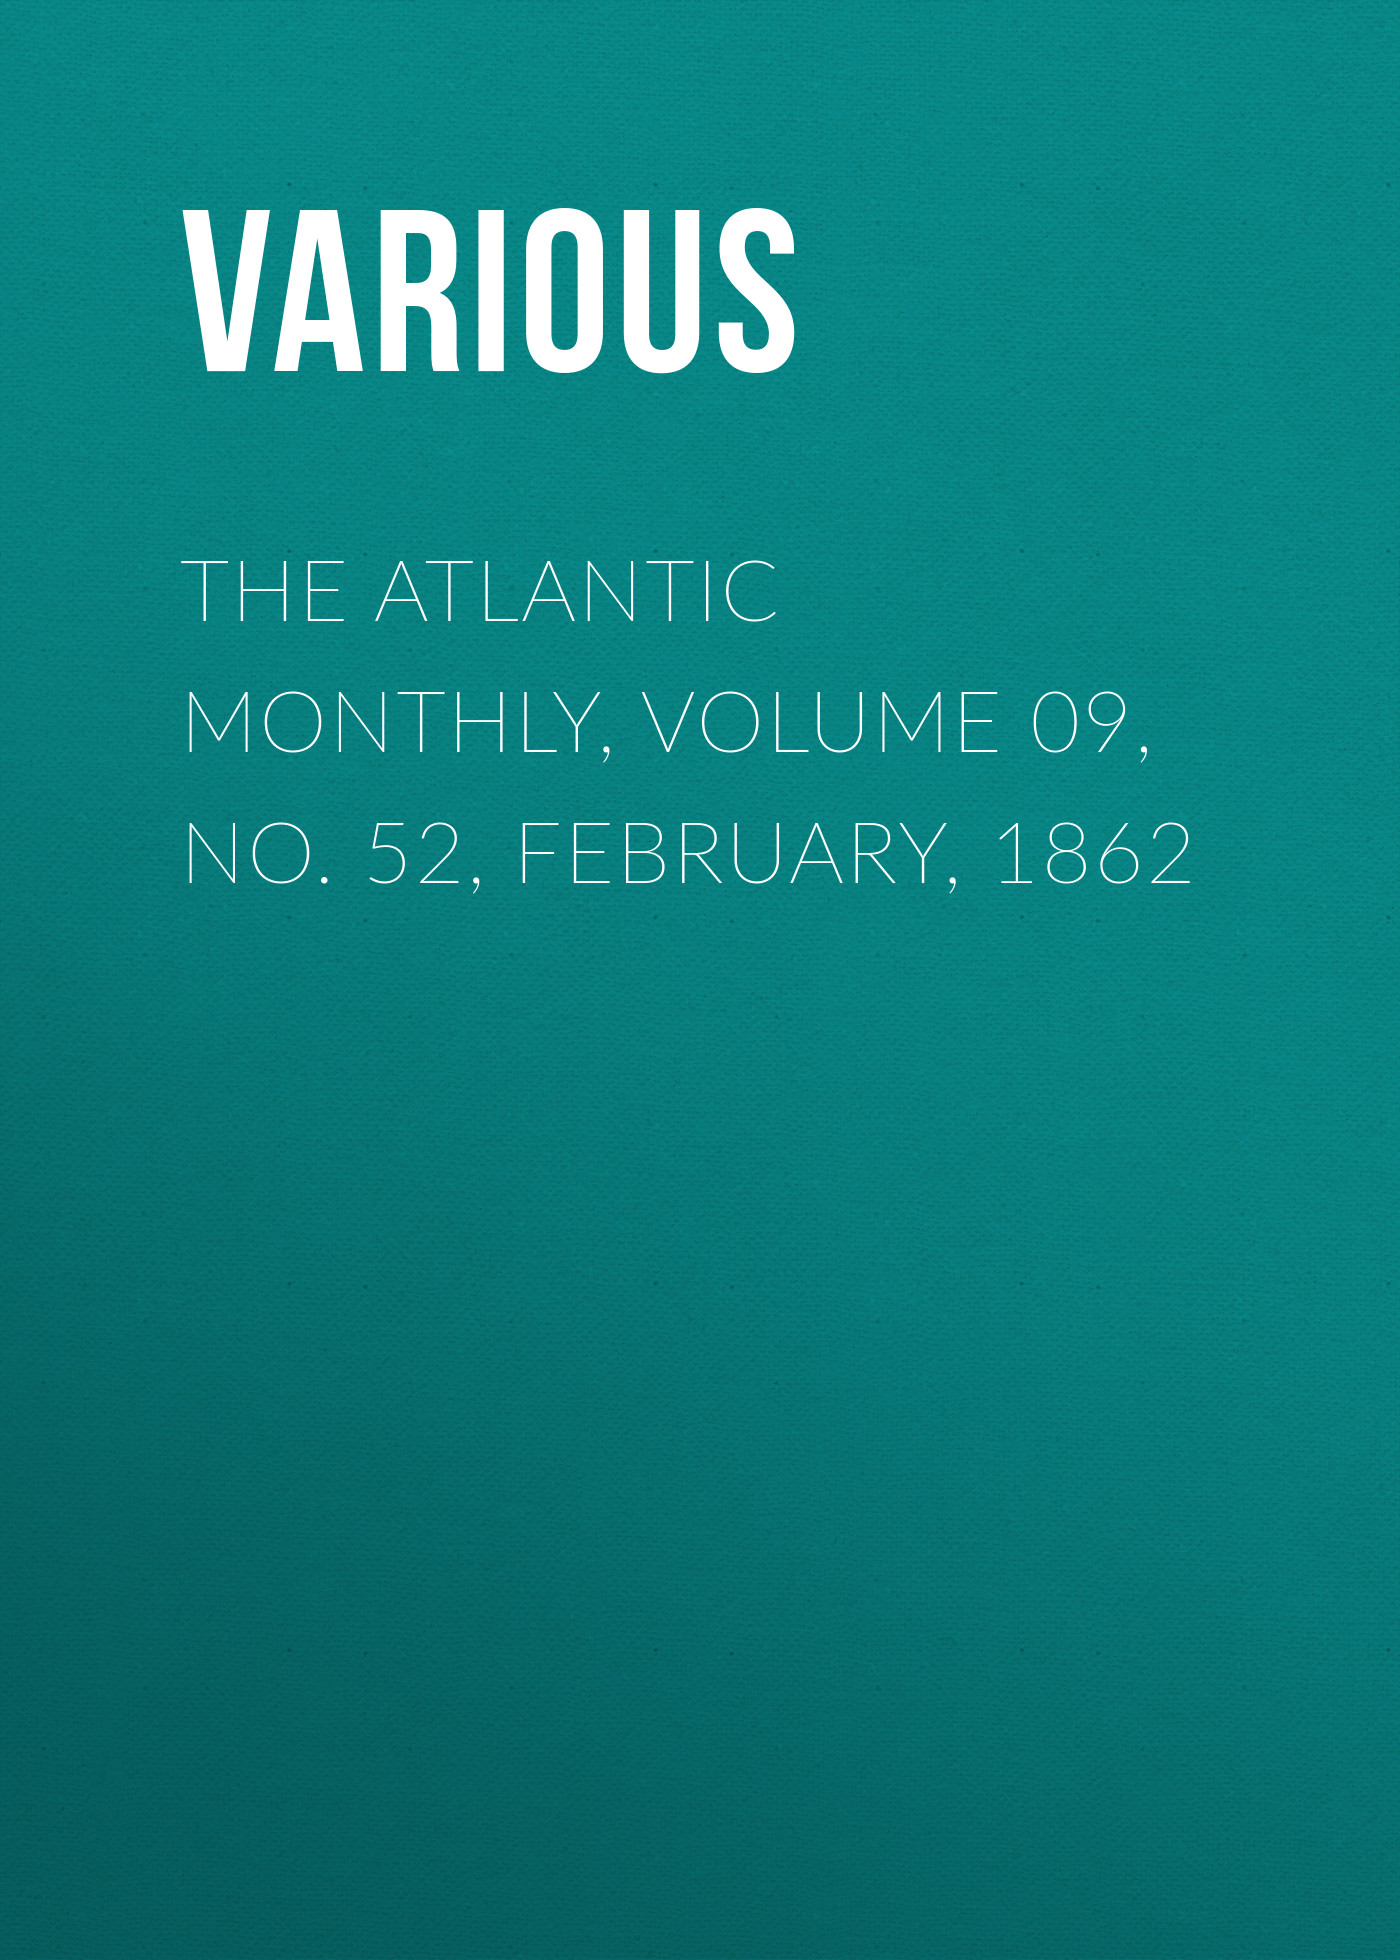 The Atlantic Monthly, Volume 09, No. 52, February, 1862